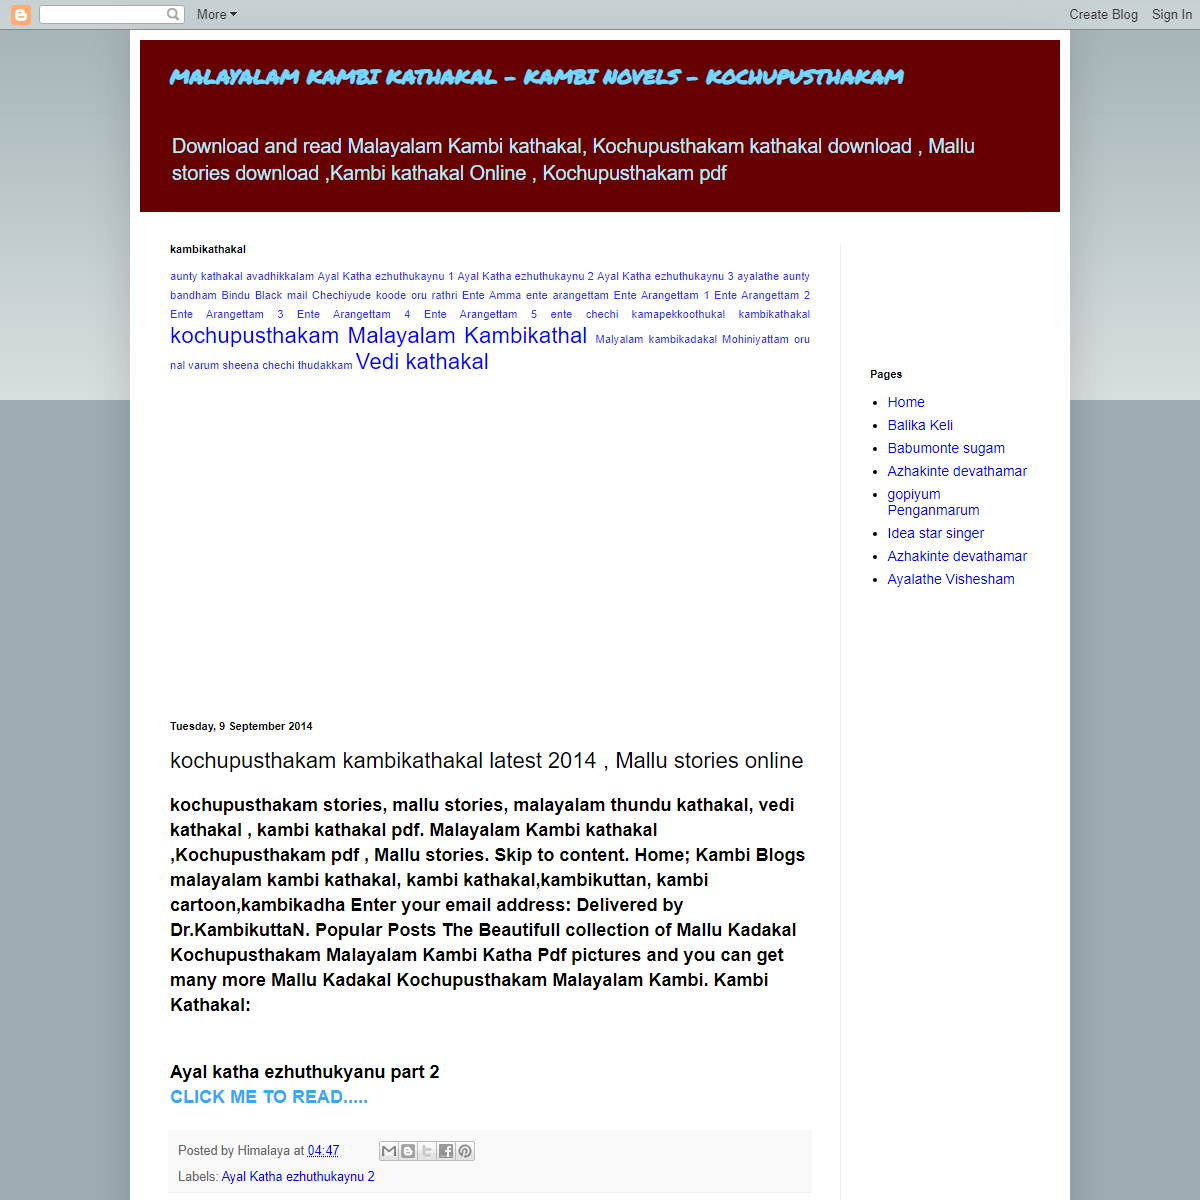 A complete backup of https://malayalamkambikathakal-docs.blogspot.com/2014/09/kochupusthakam-kambikathakal-latest.html